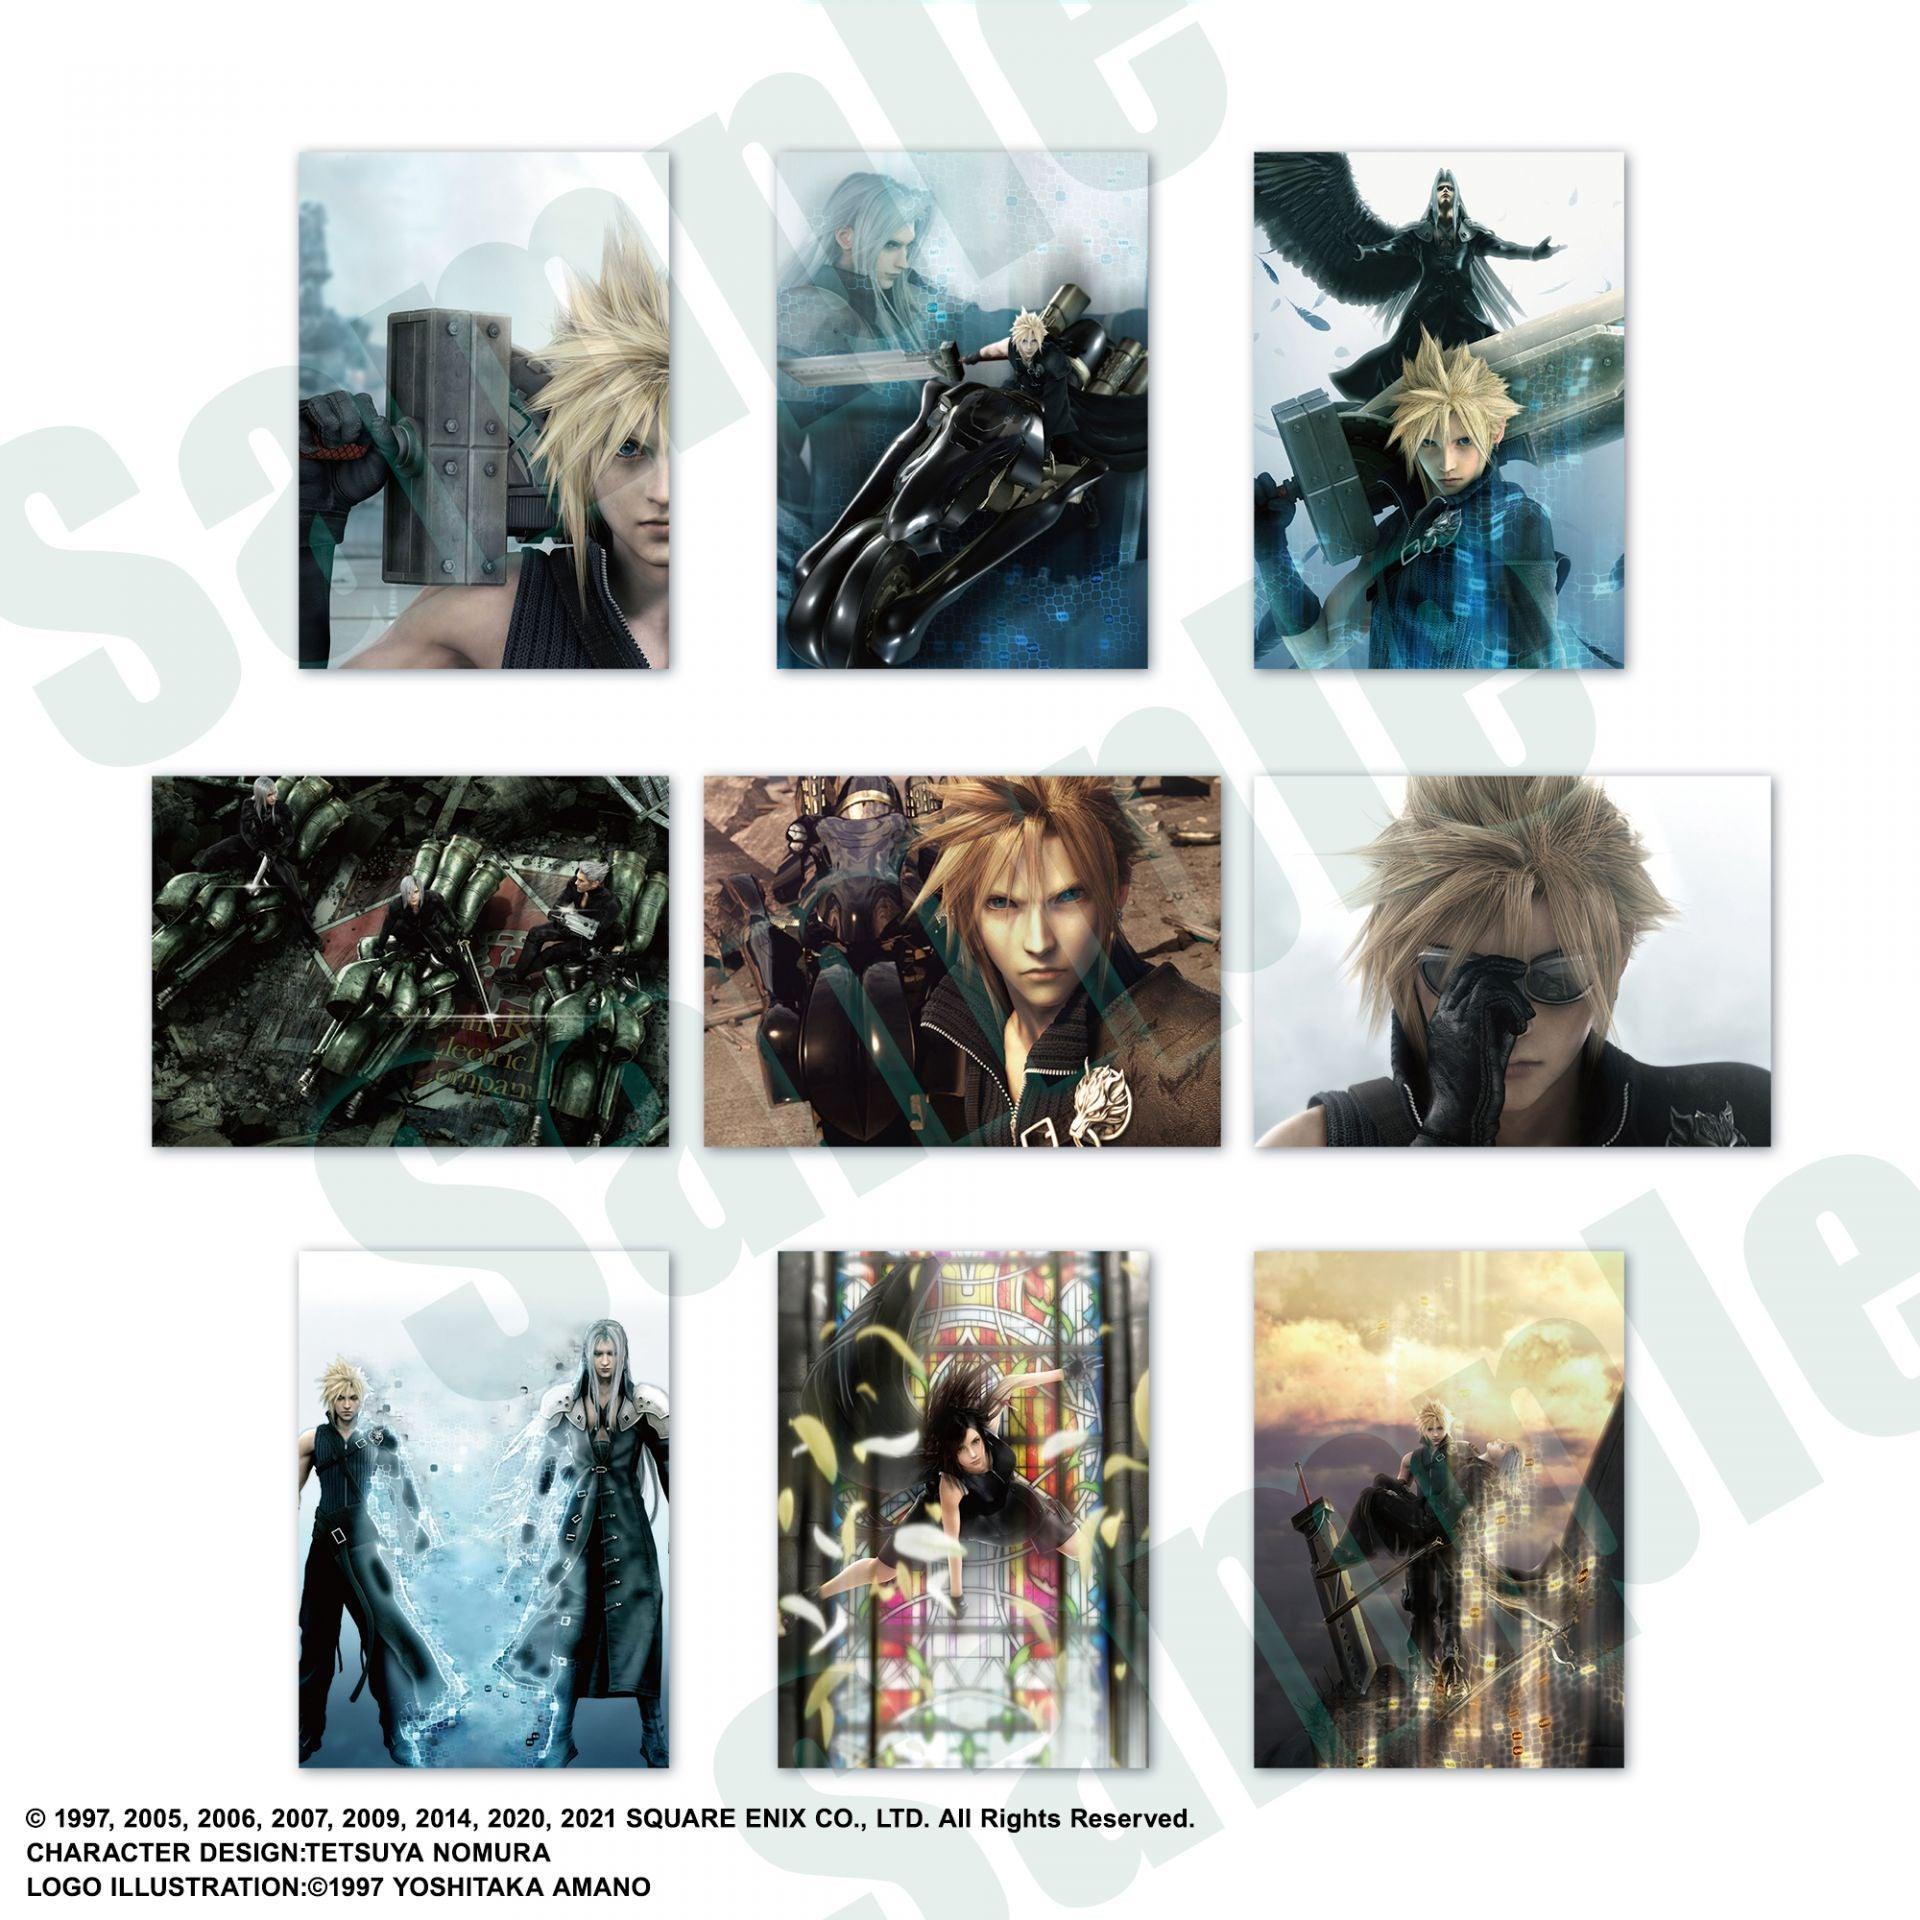 Final Fantasy TCG: Final Fantasy VII 25th Anniversary - Art Museum Digital Card Plus Booster Box (20 Packs) - The Card Vault